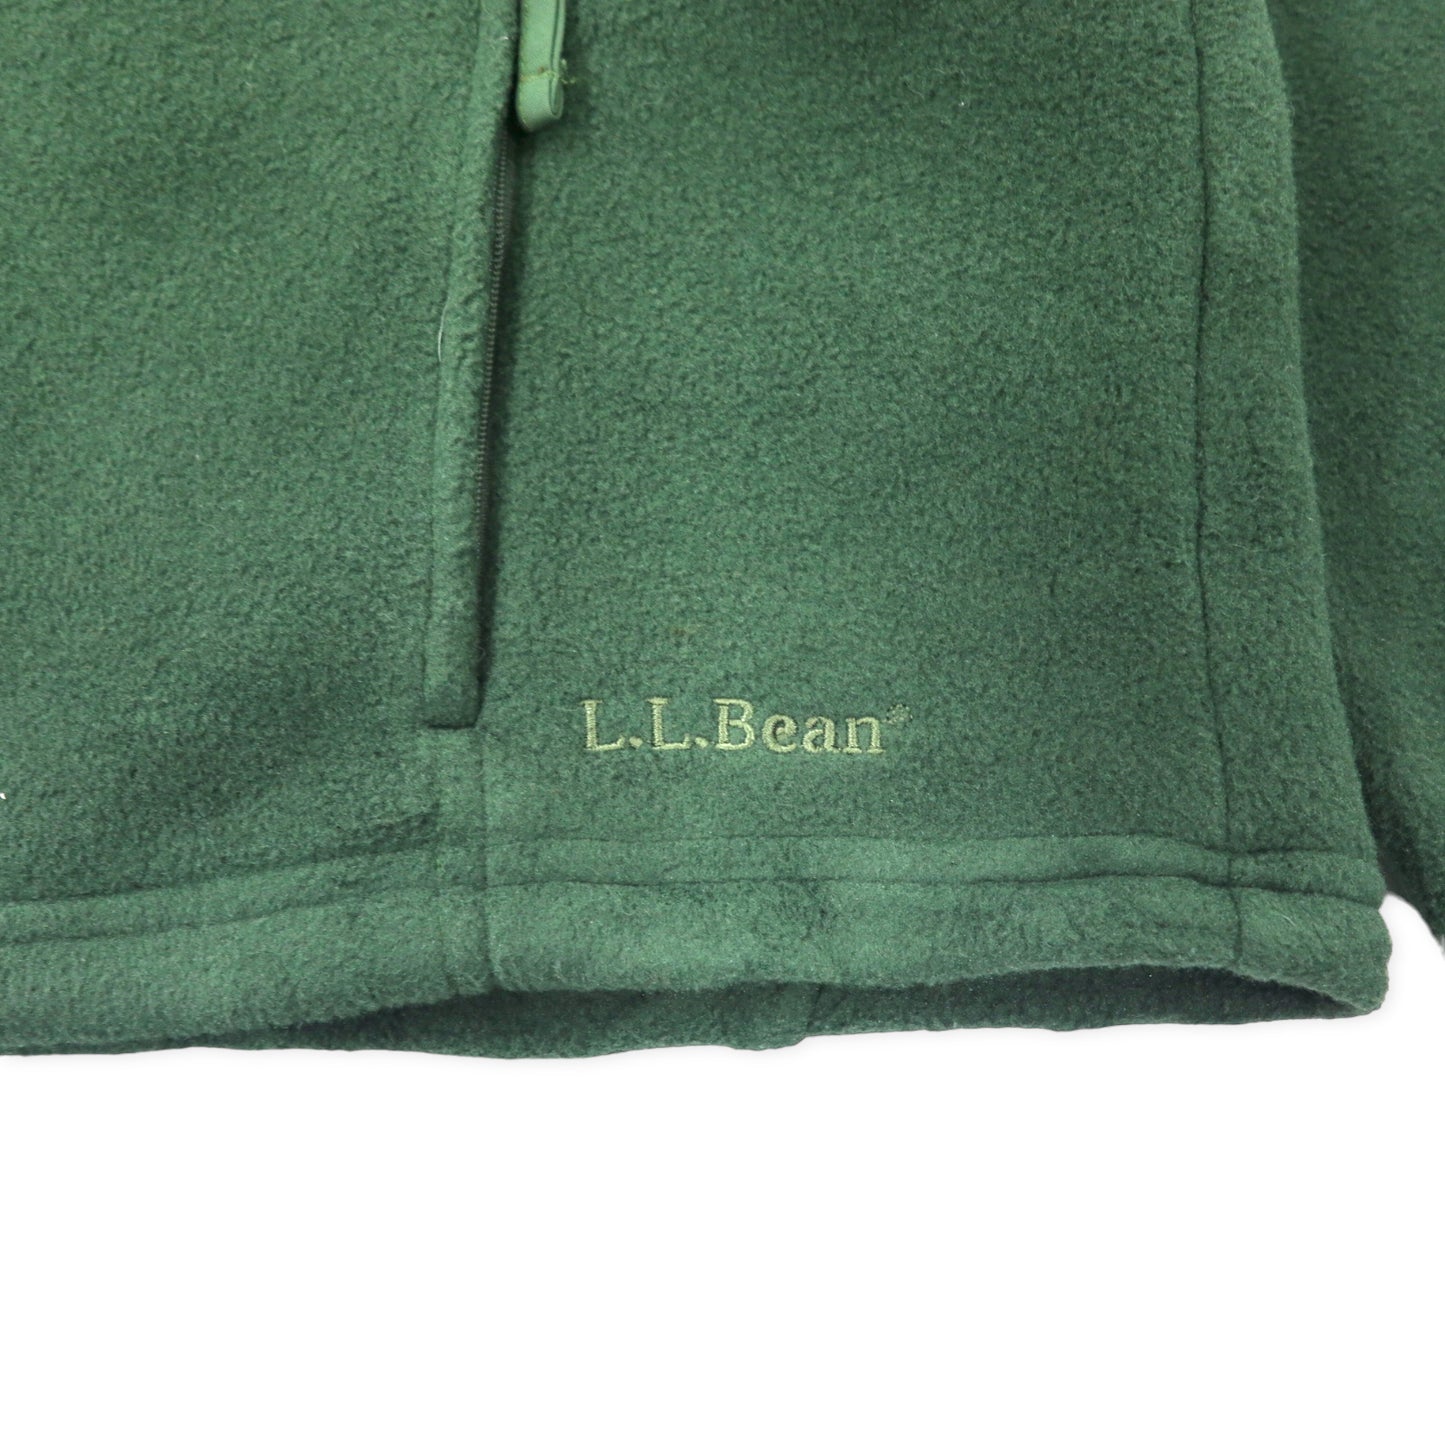 L.L.Bean 90年代 スナップT ハーフスナップ プルオーバー フリースジャケット M グリーン POLARTEC ポリエステル 山タグ エルサルバドル製